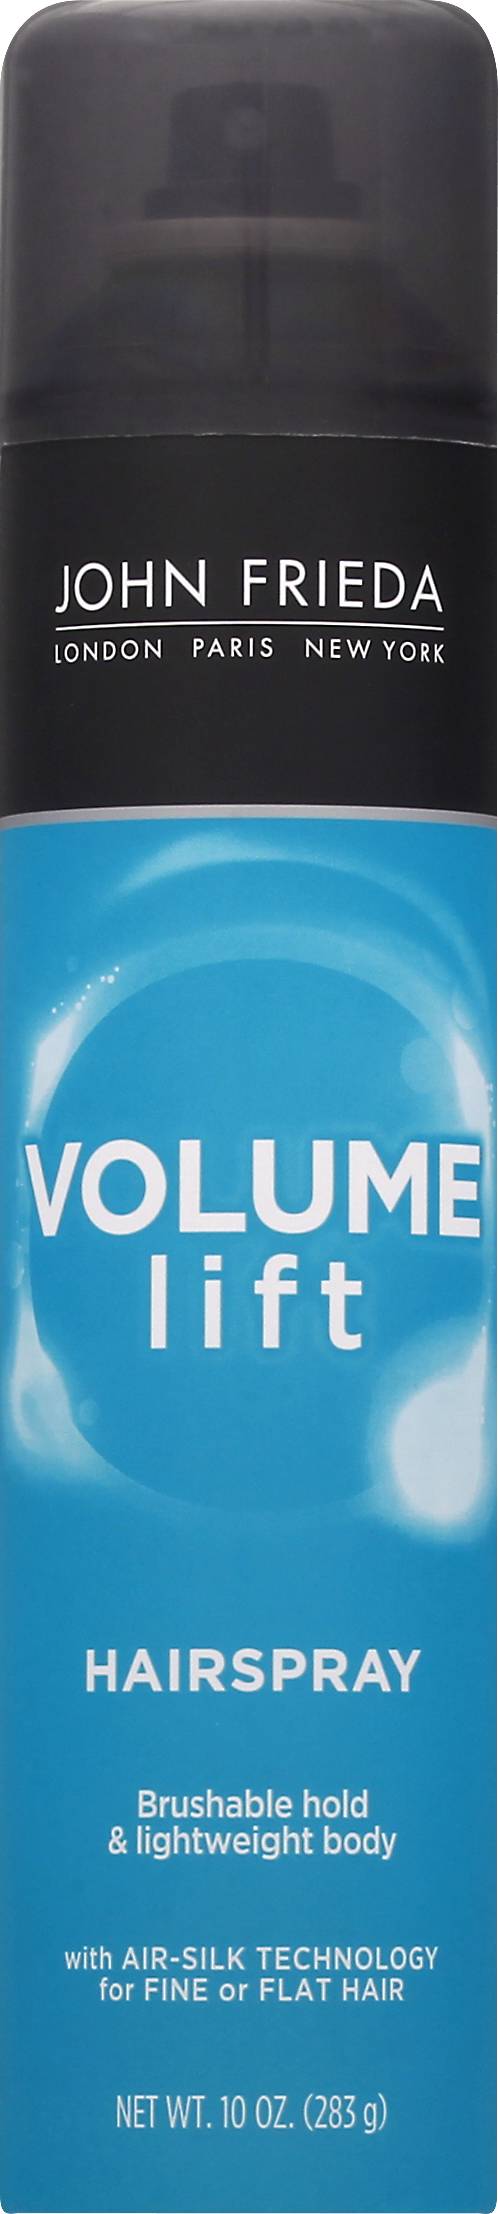 John Frieda Volume Lift Hairspray.